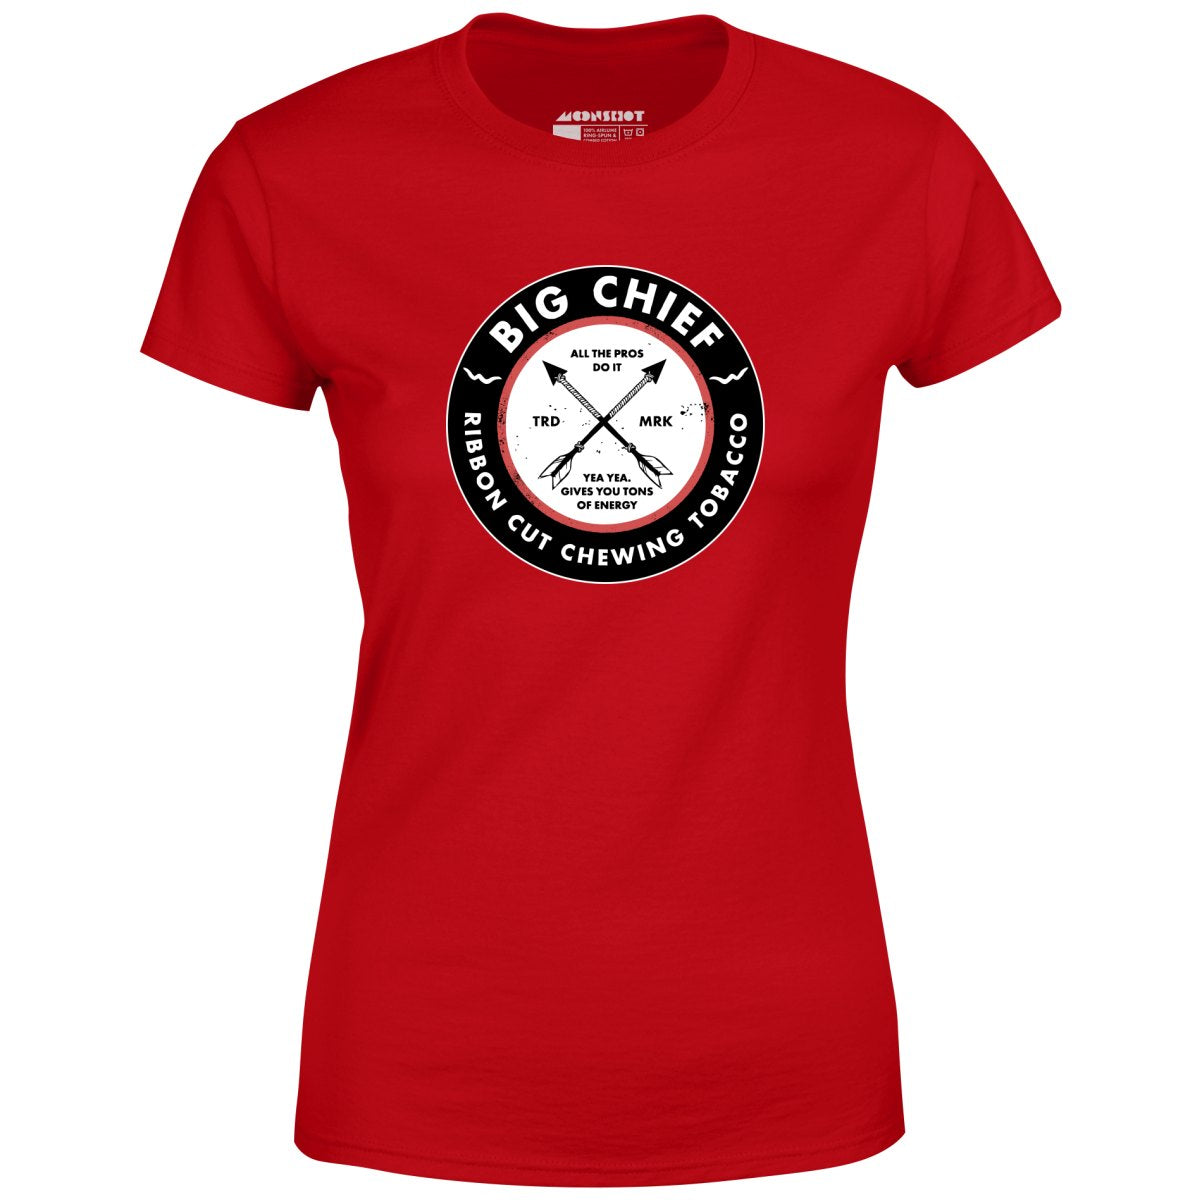 Big Chief - Yea Yea Gives You Tons of Energy - Women's T-Shirt